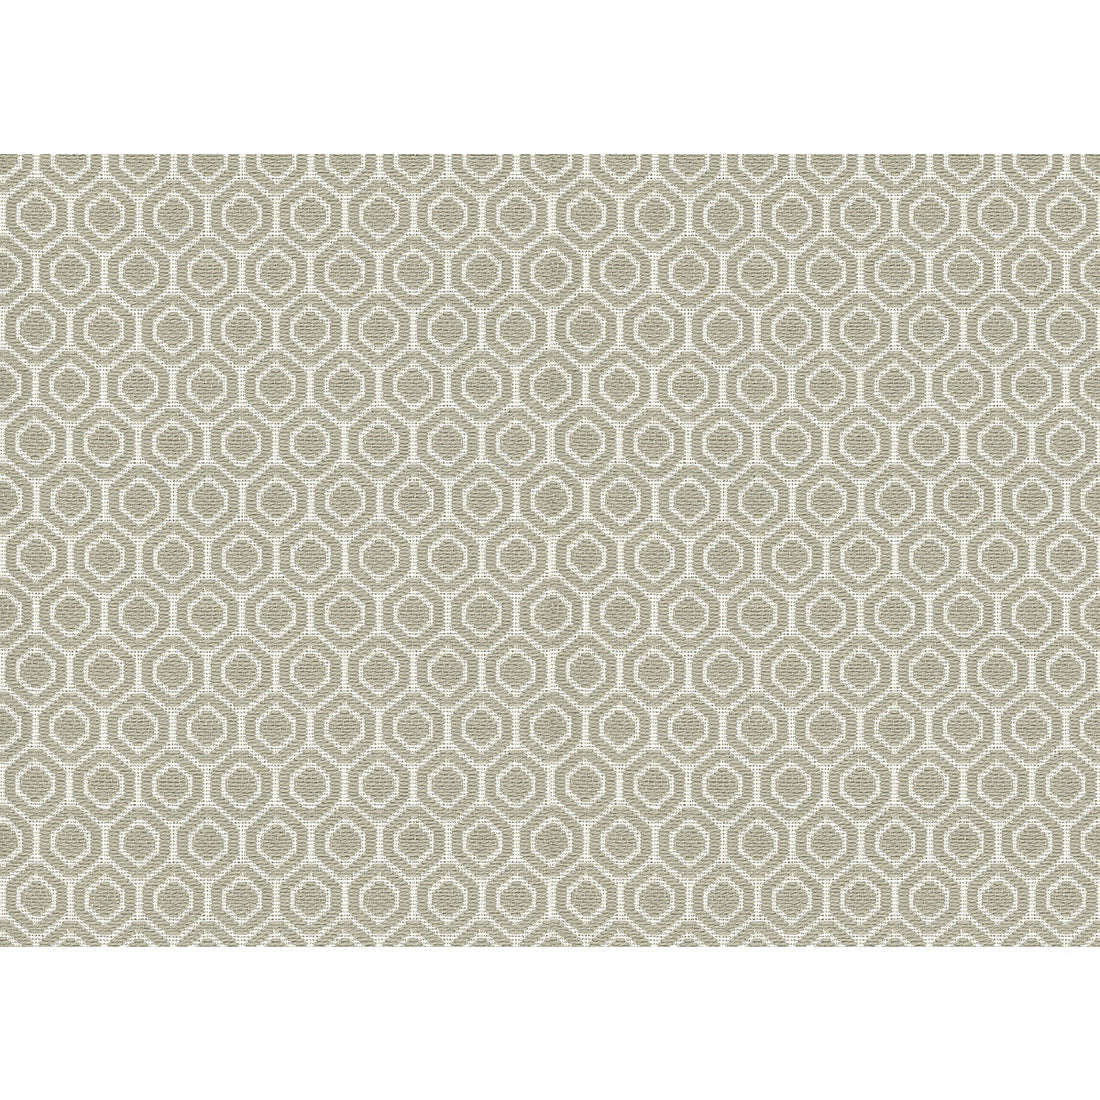 Kravet Smart fabric in 34480-16 color - pattern 34480.16.0 - by Kravet Smart